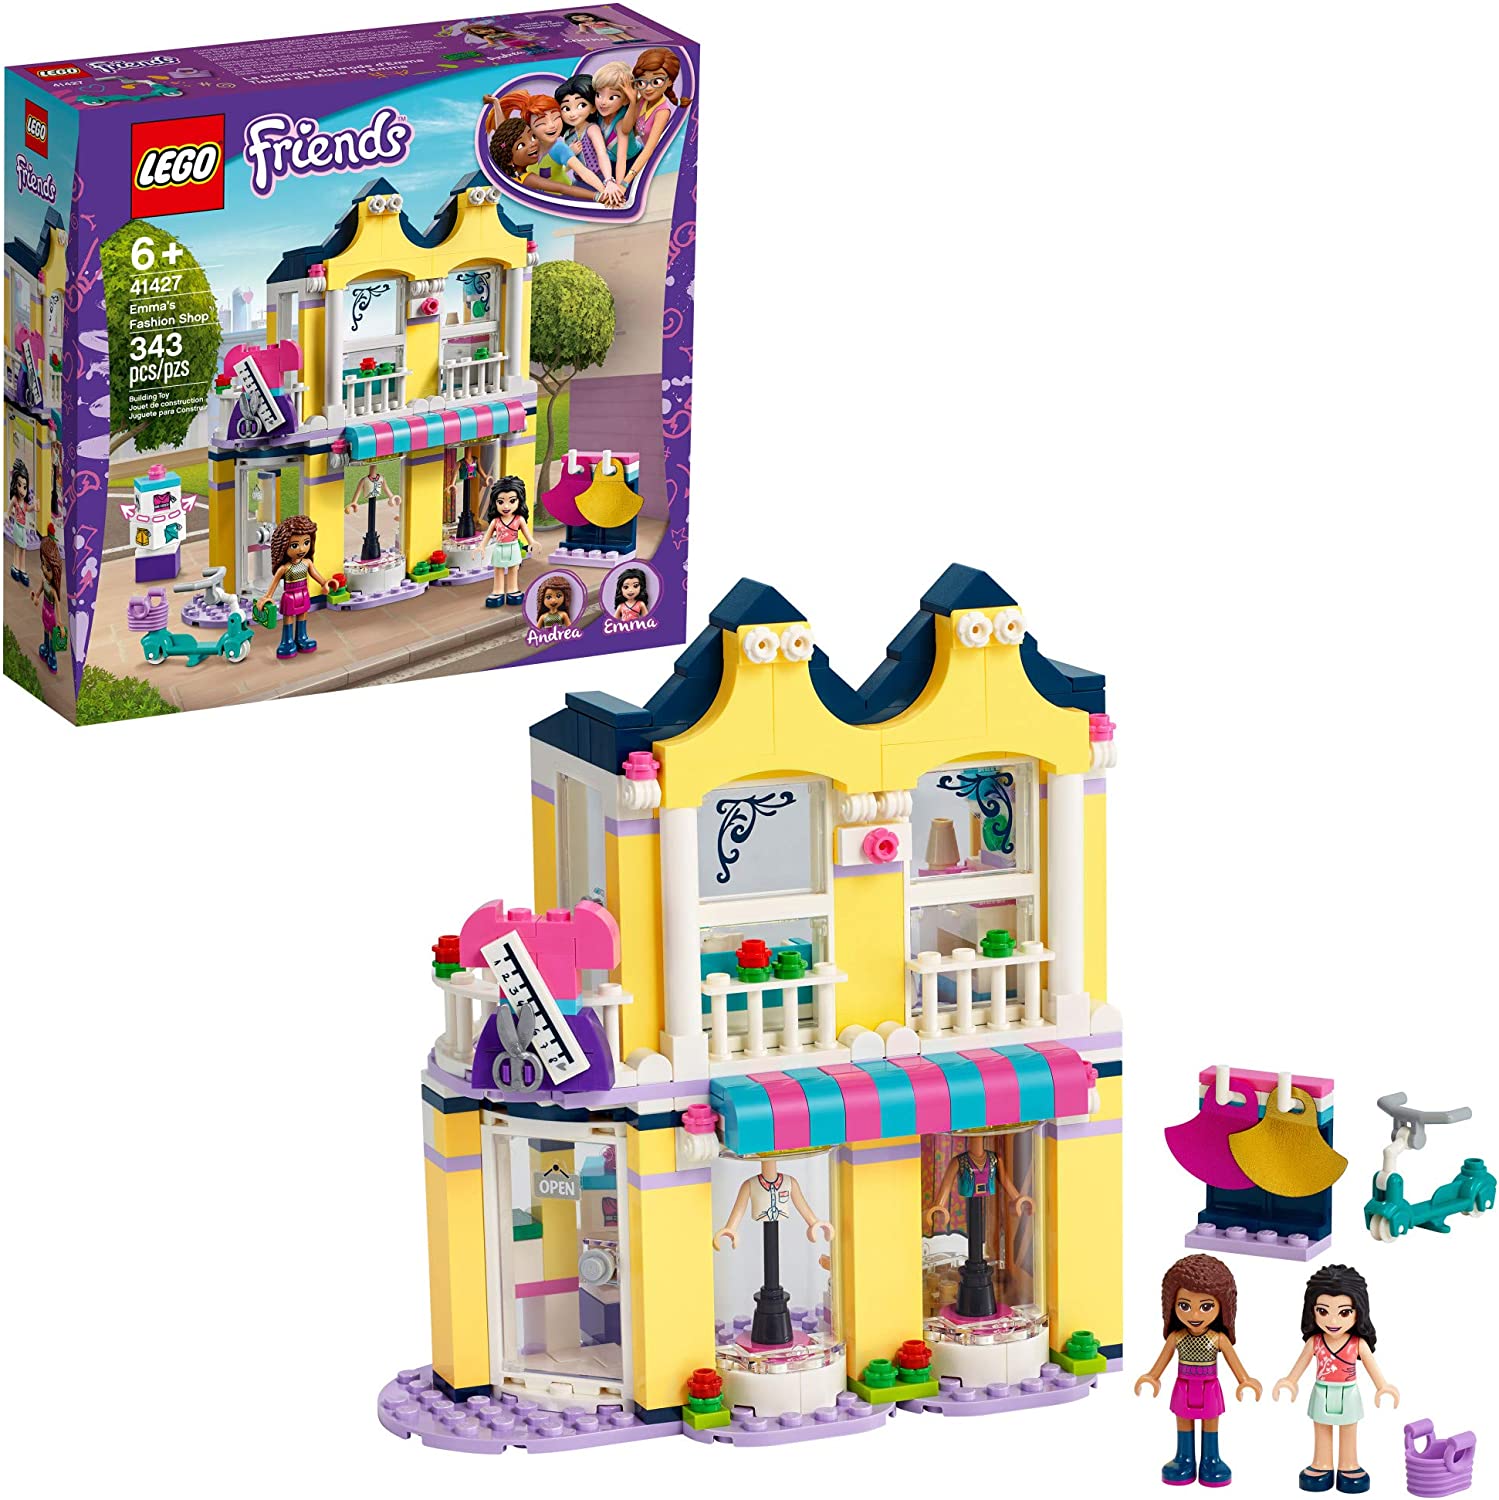 LEGO Friends Emma’s Fashion Shop 41427, Includes Friends Emma and Andrea (343 Pieces)